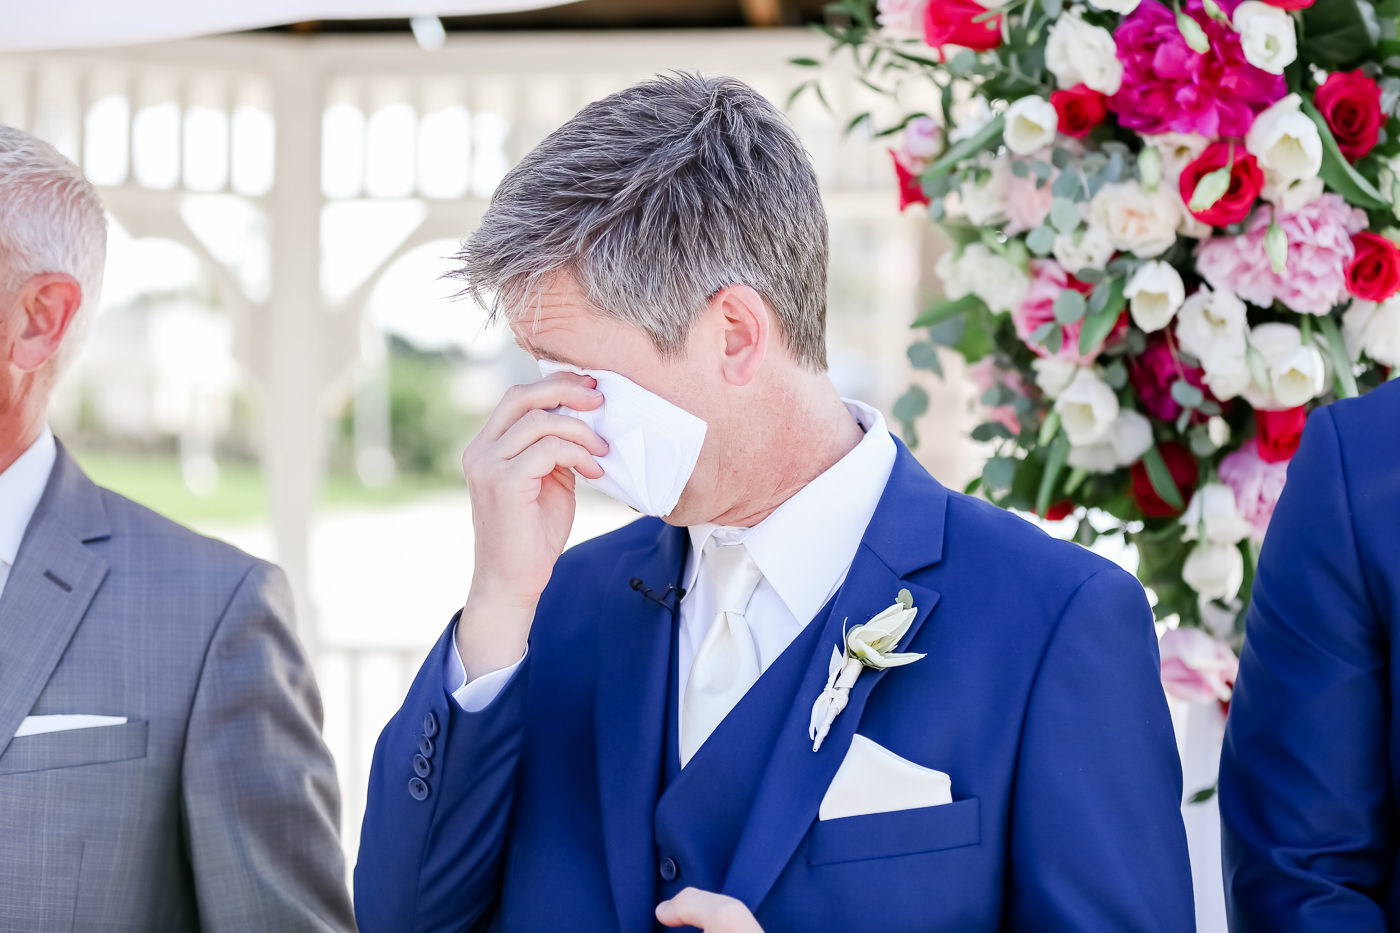 Emotional Groom Wedding Ceremony Portrait | Tampa Bay Wedding Photographer Lifelong Photography Studios